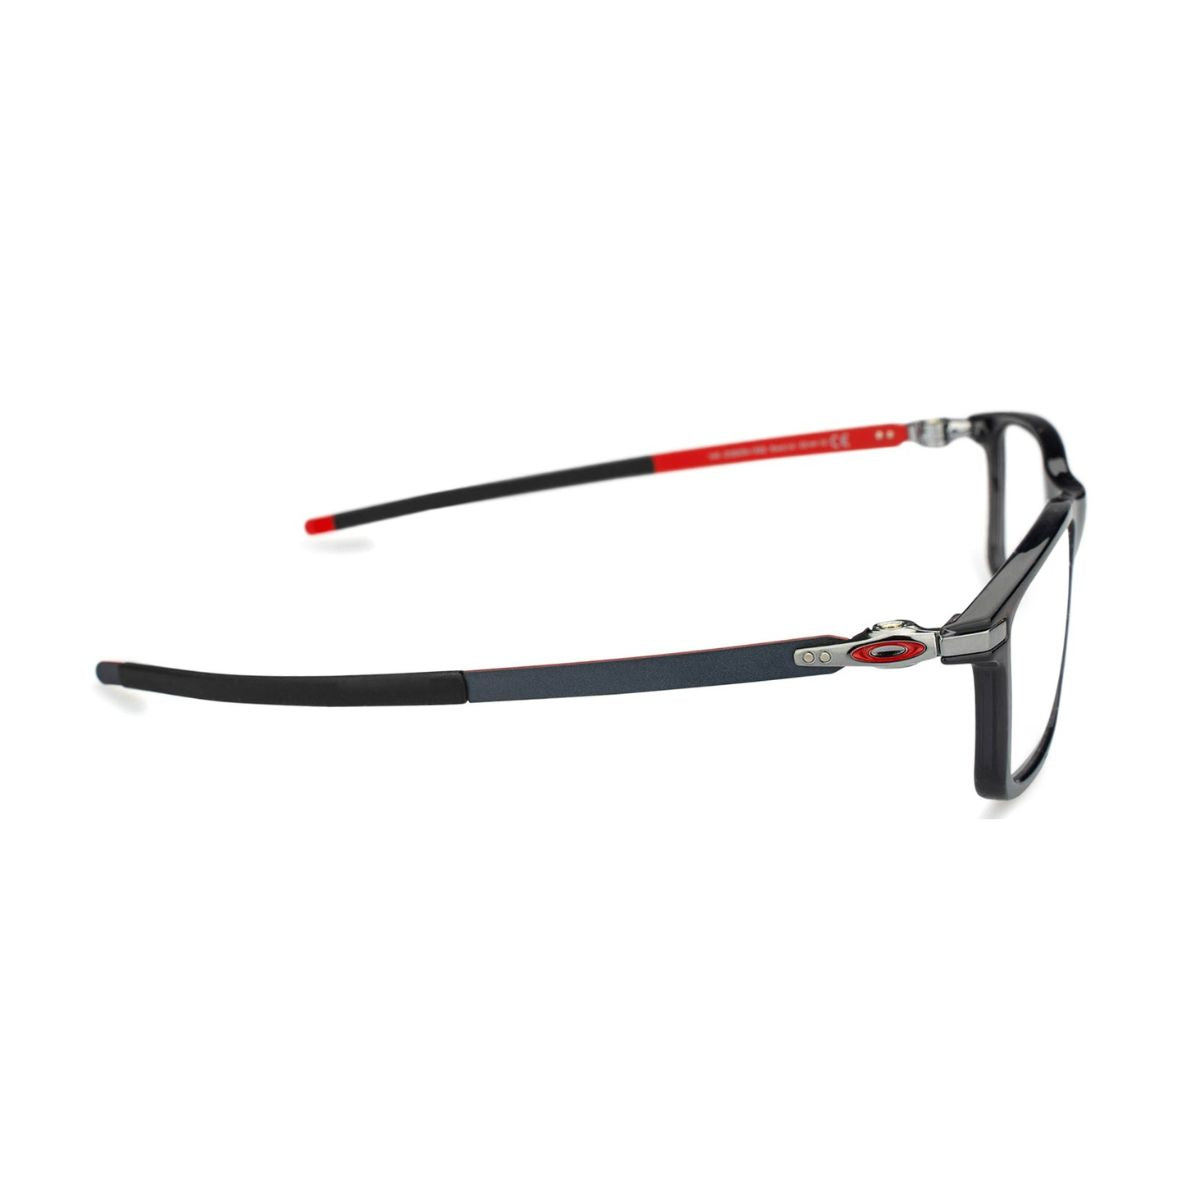 "Oakley 8050 1553 spactacle eyeglasses frame for men's at optorium"